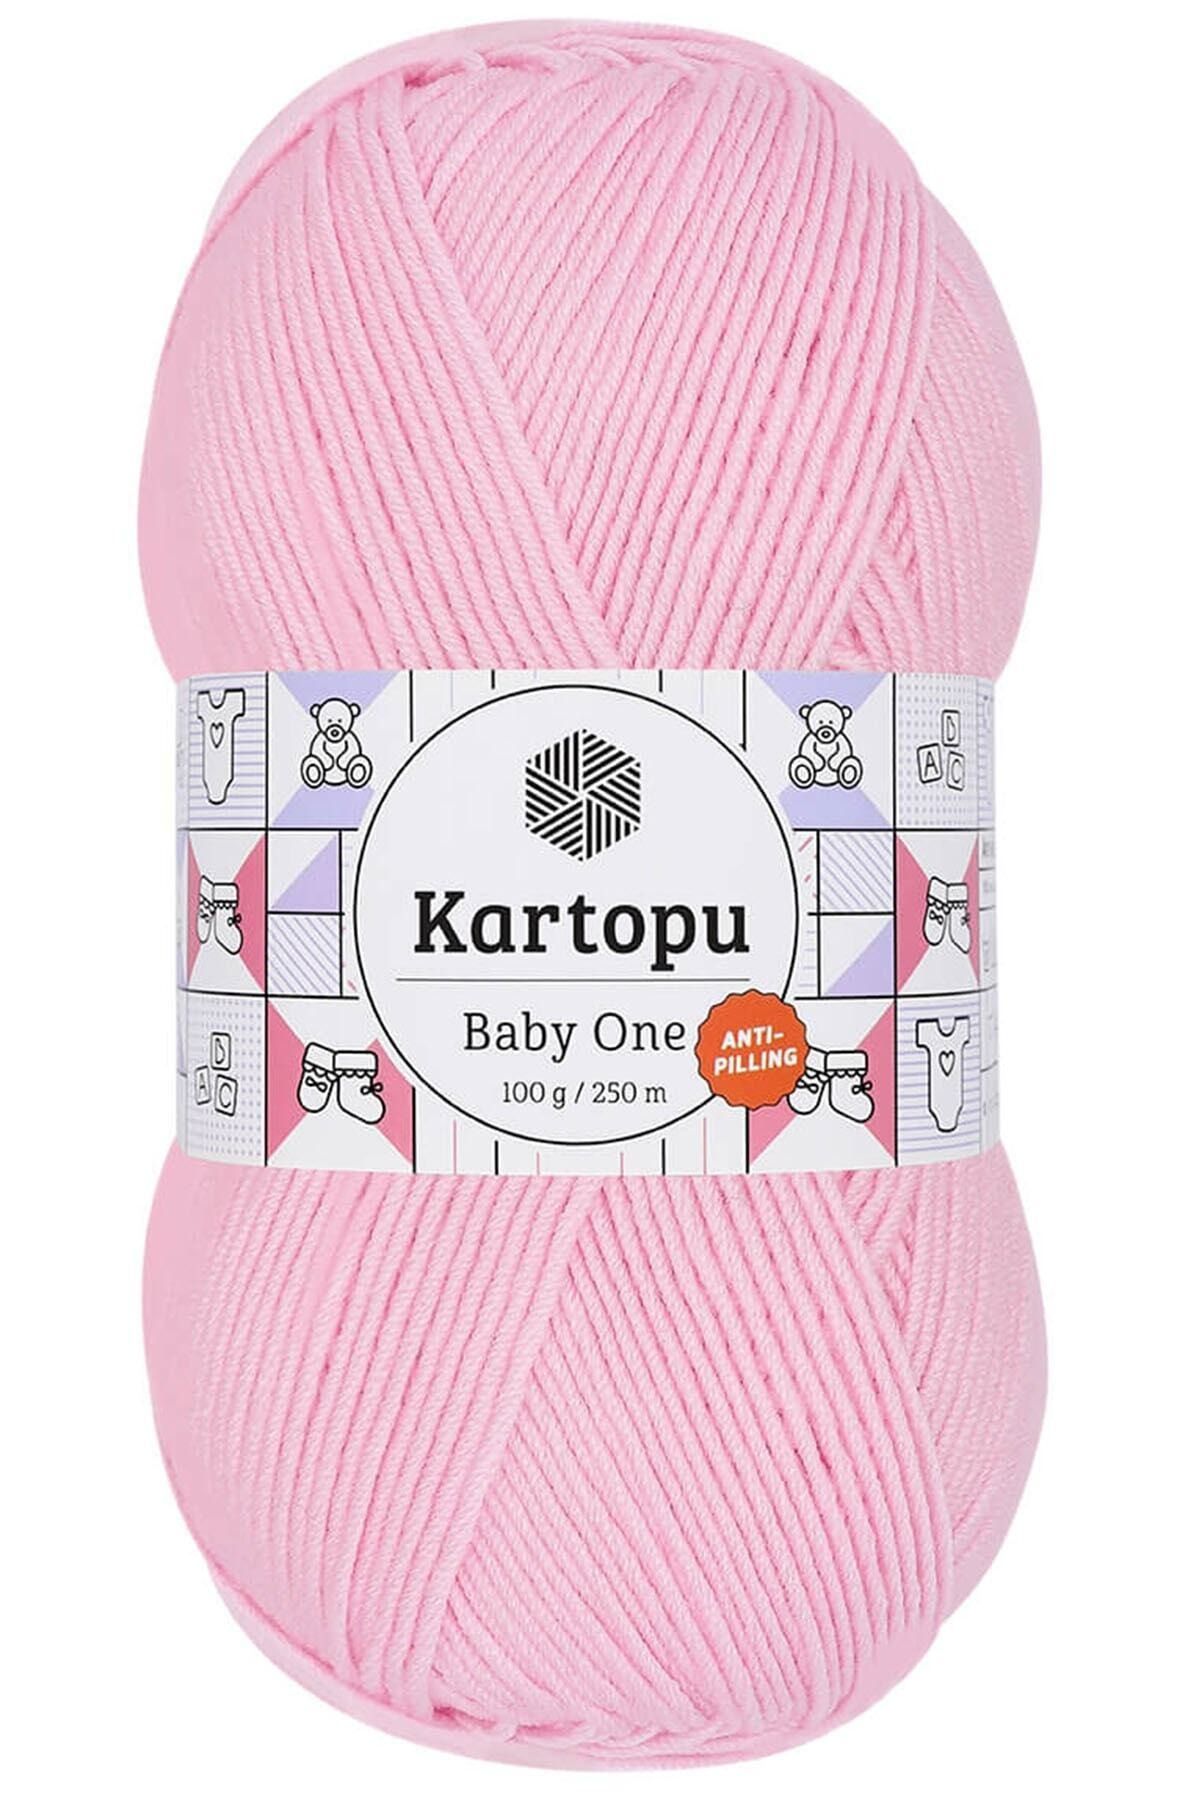 Kartopu Baby One Tüylenmeyen Bebek Yünü Açık Pembe K782